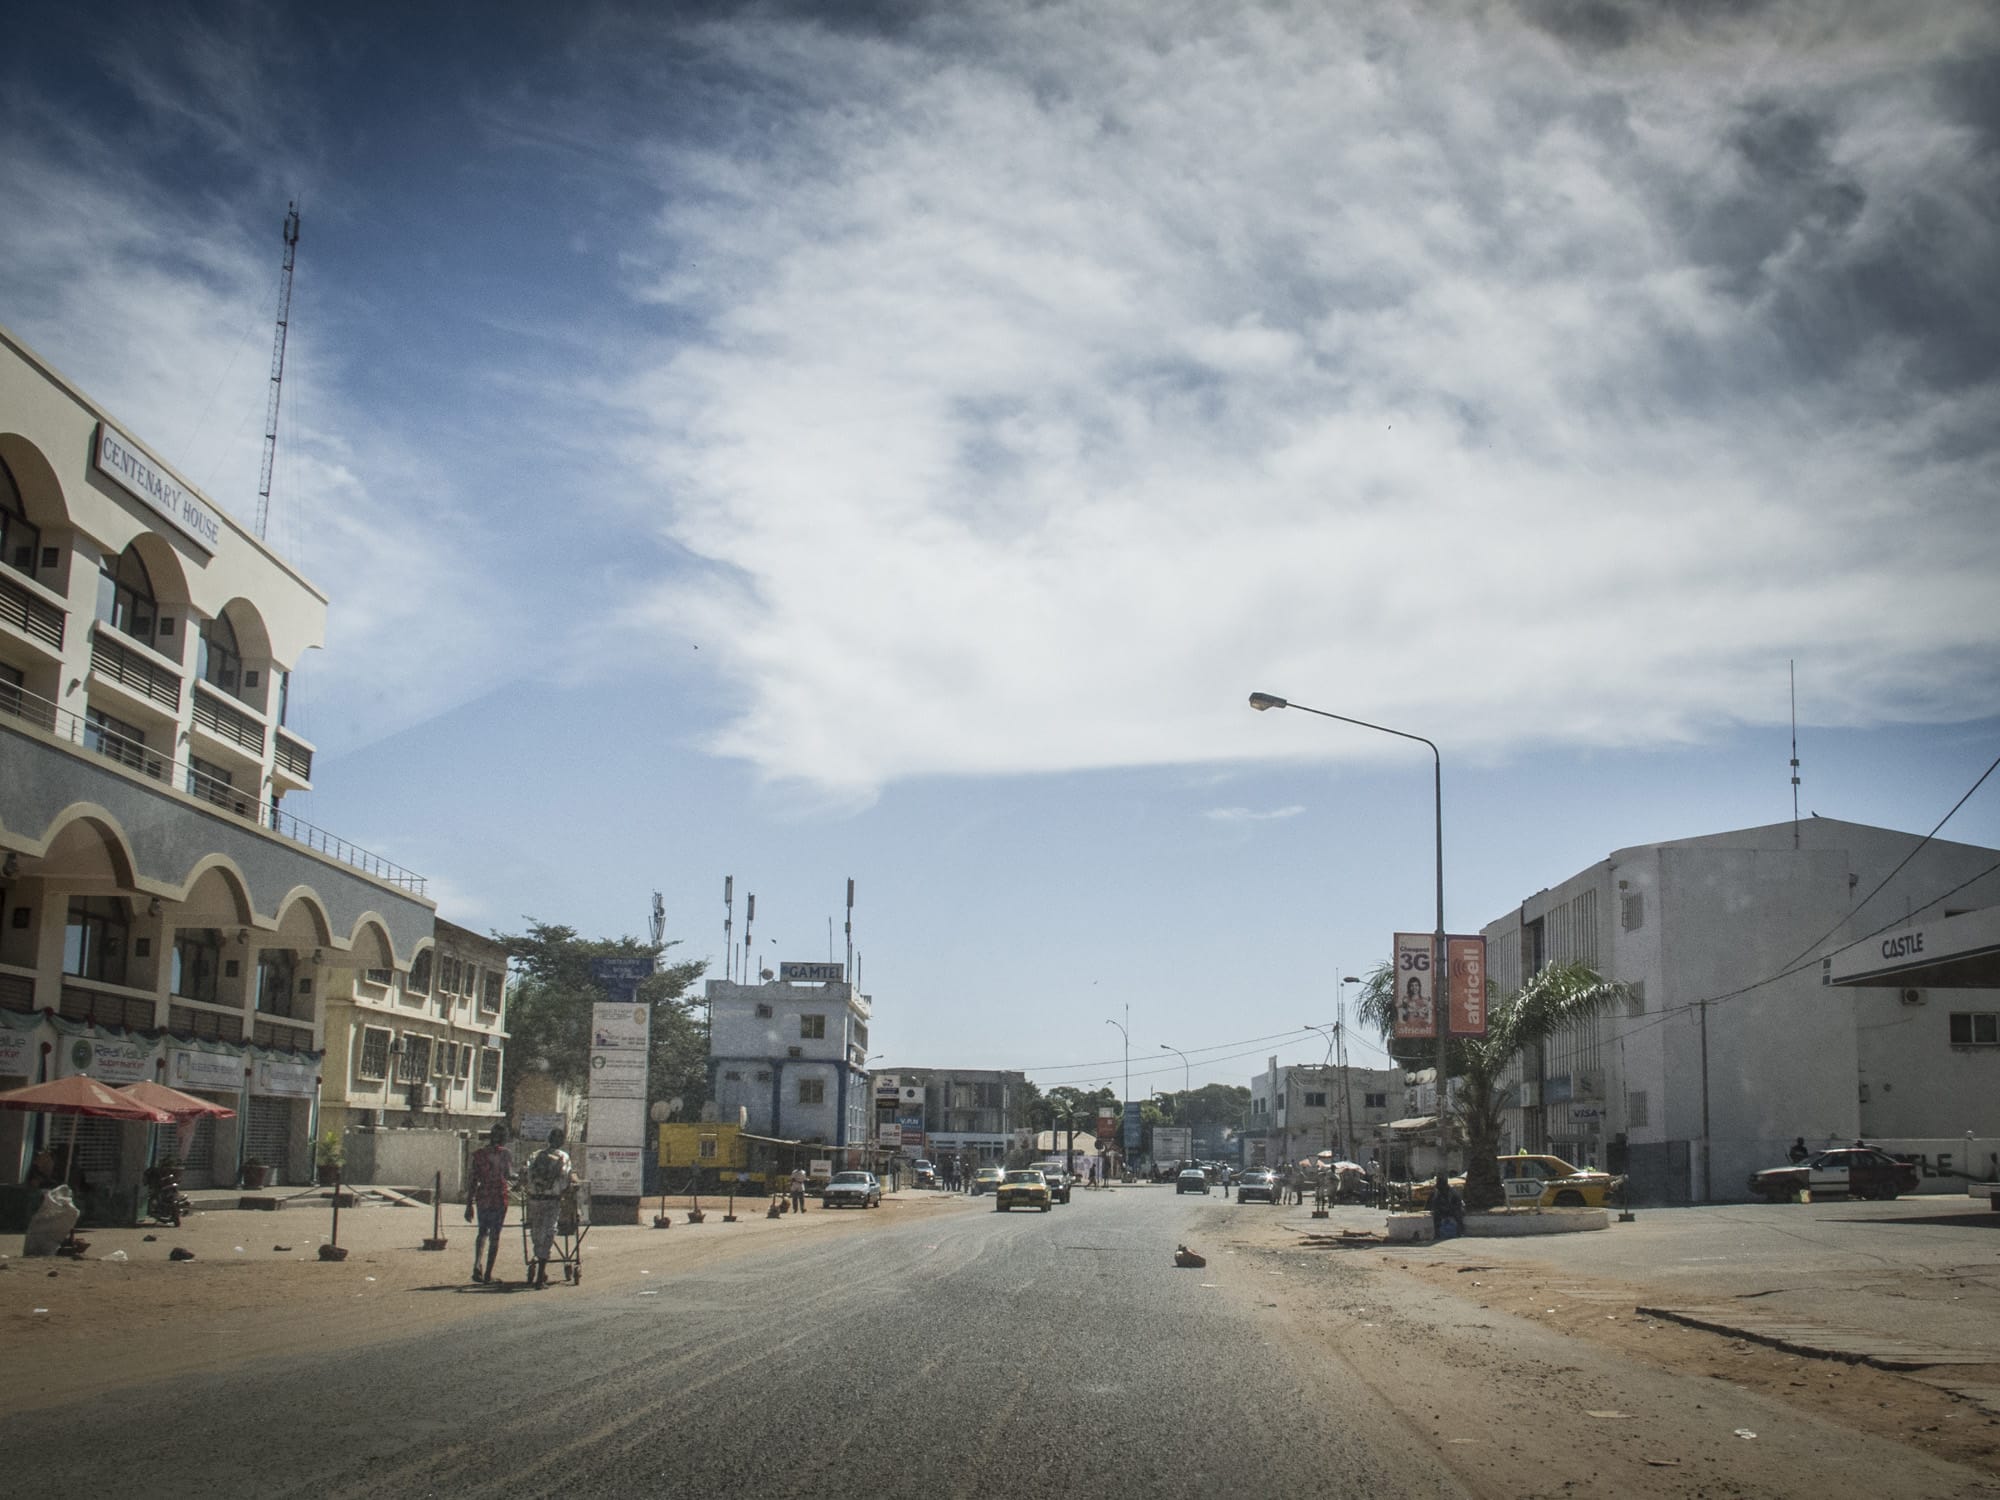 Residents walk on an empty street in Banjul, The Gambia, 30 December 2014, AP Photo/Jason Florio